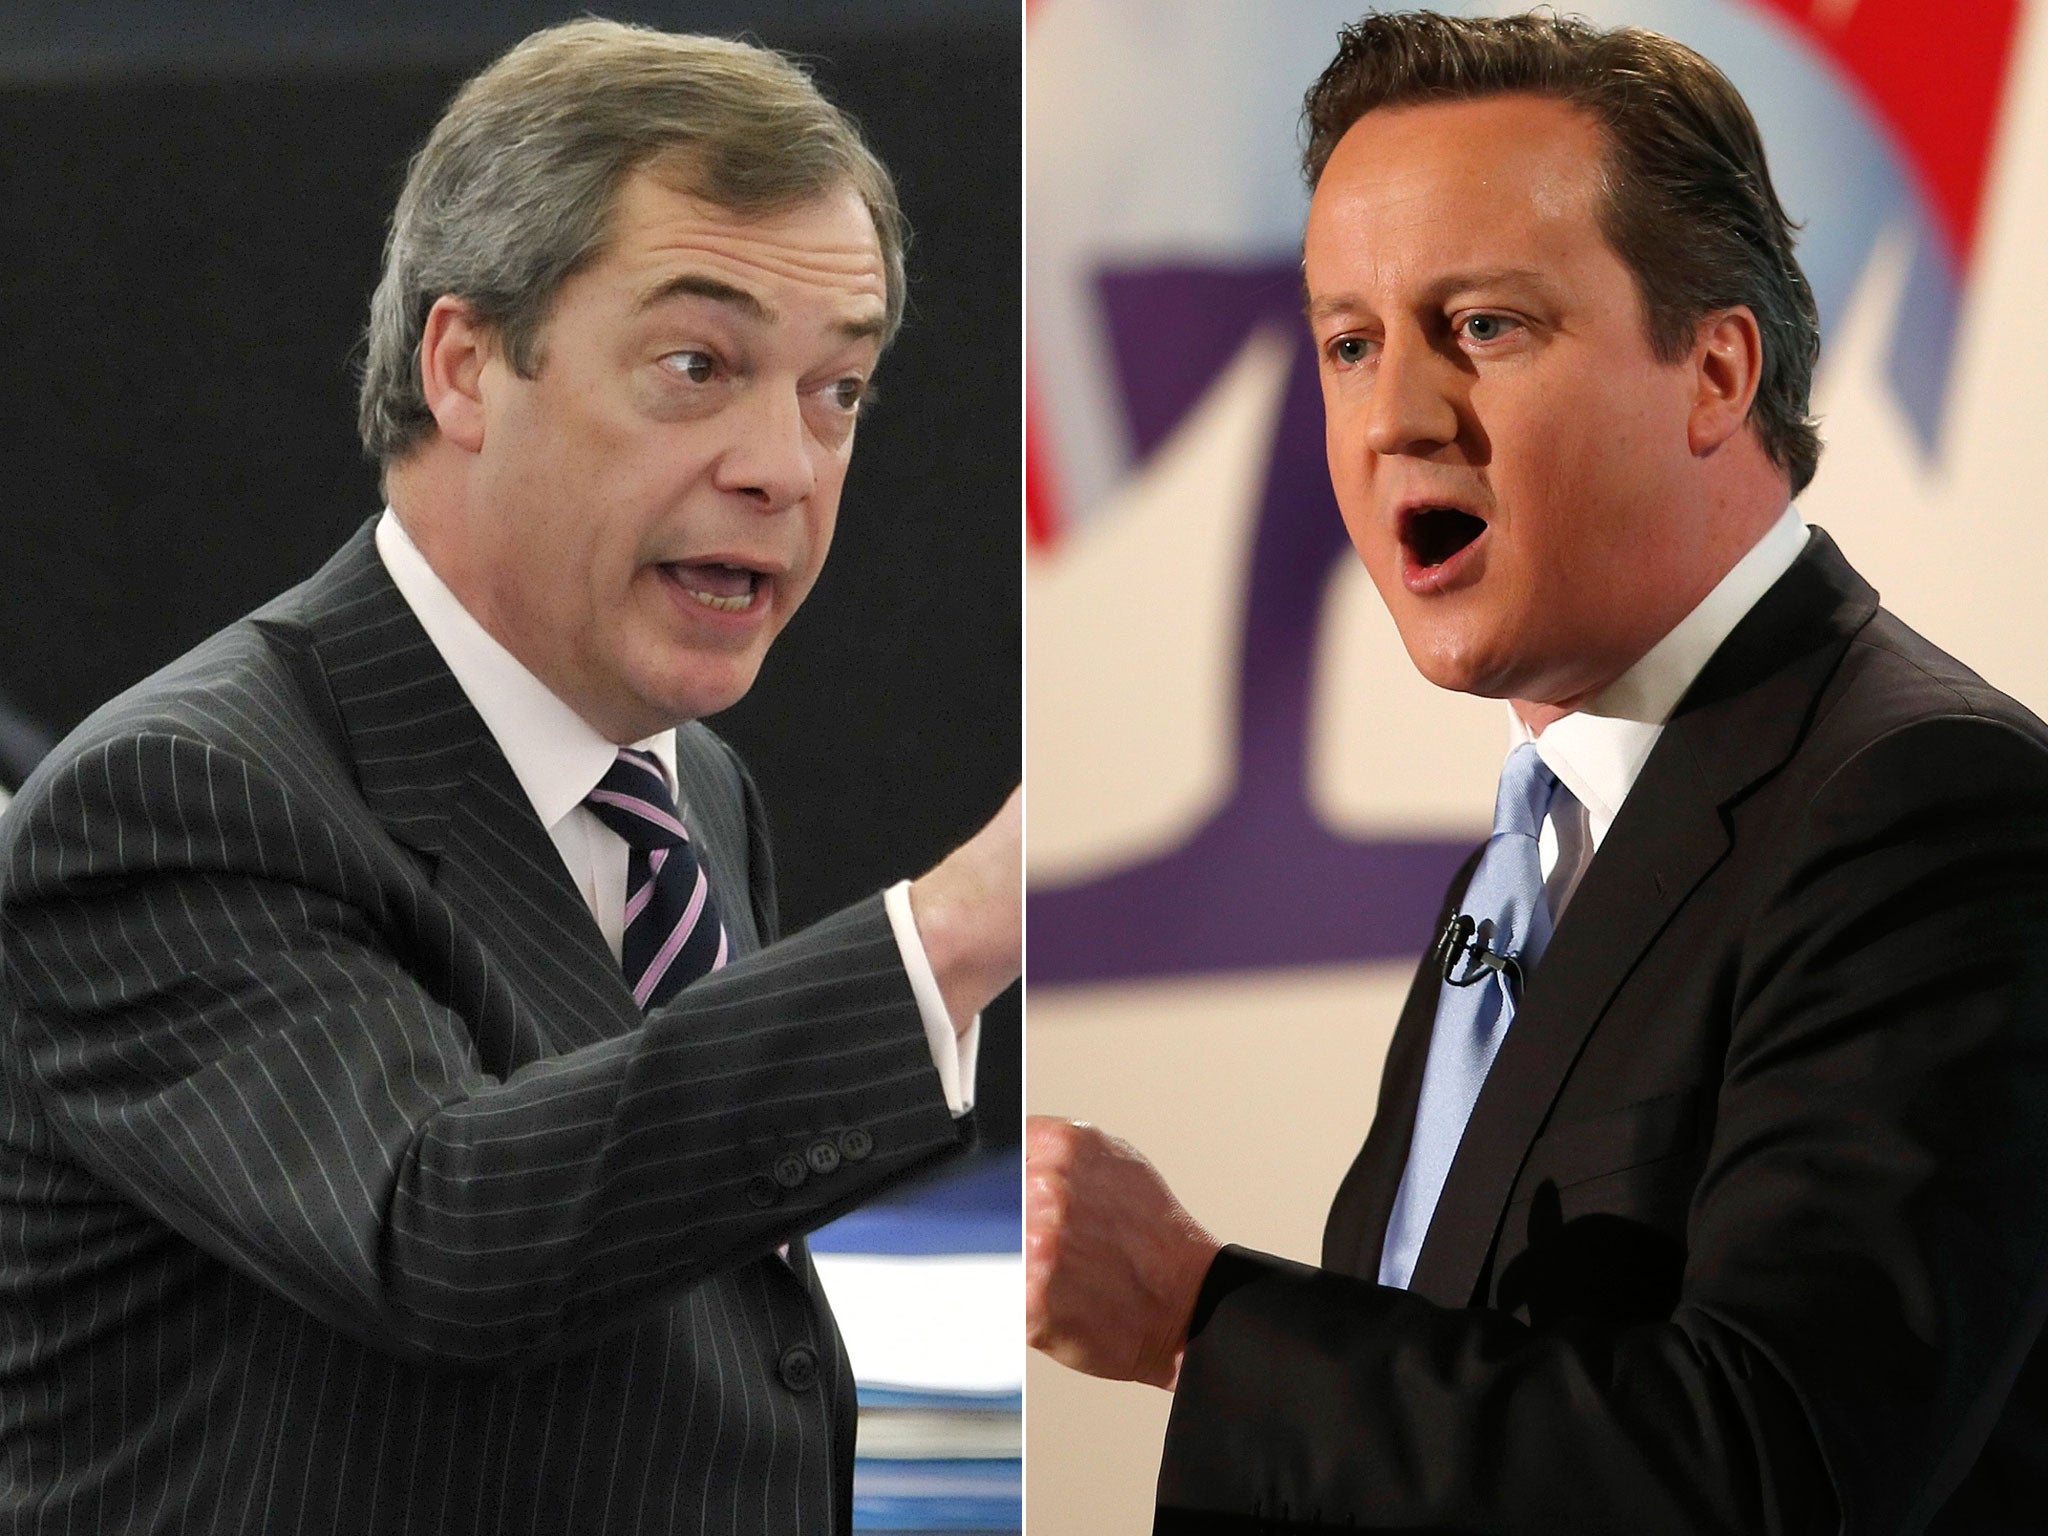 Nigel Farage of Ukip and Prime Minister David Cameron